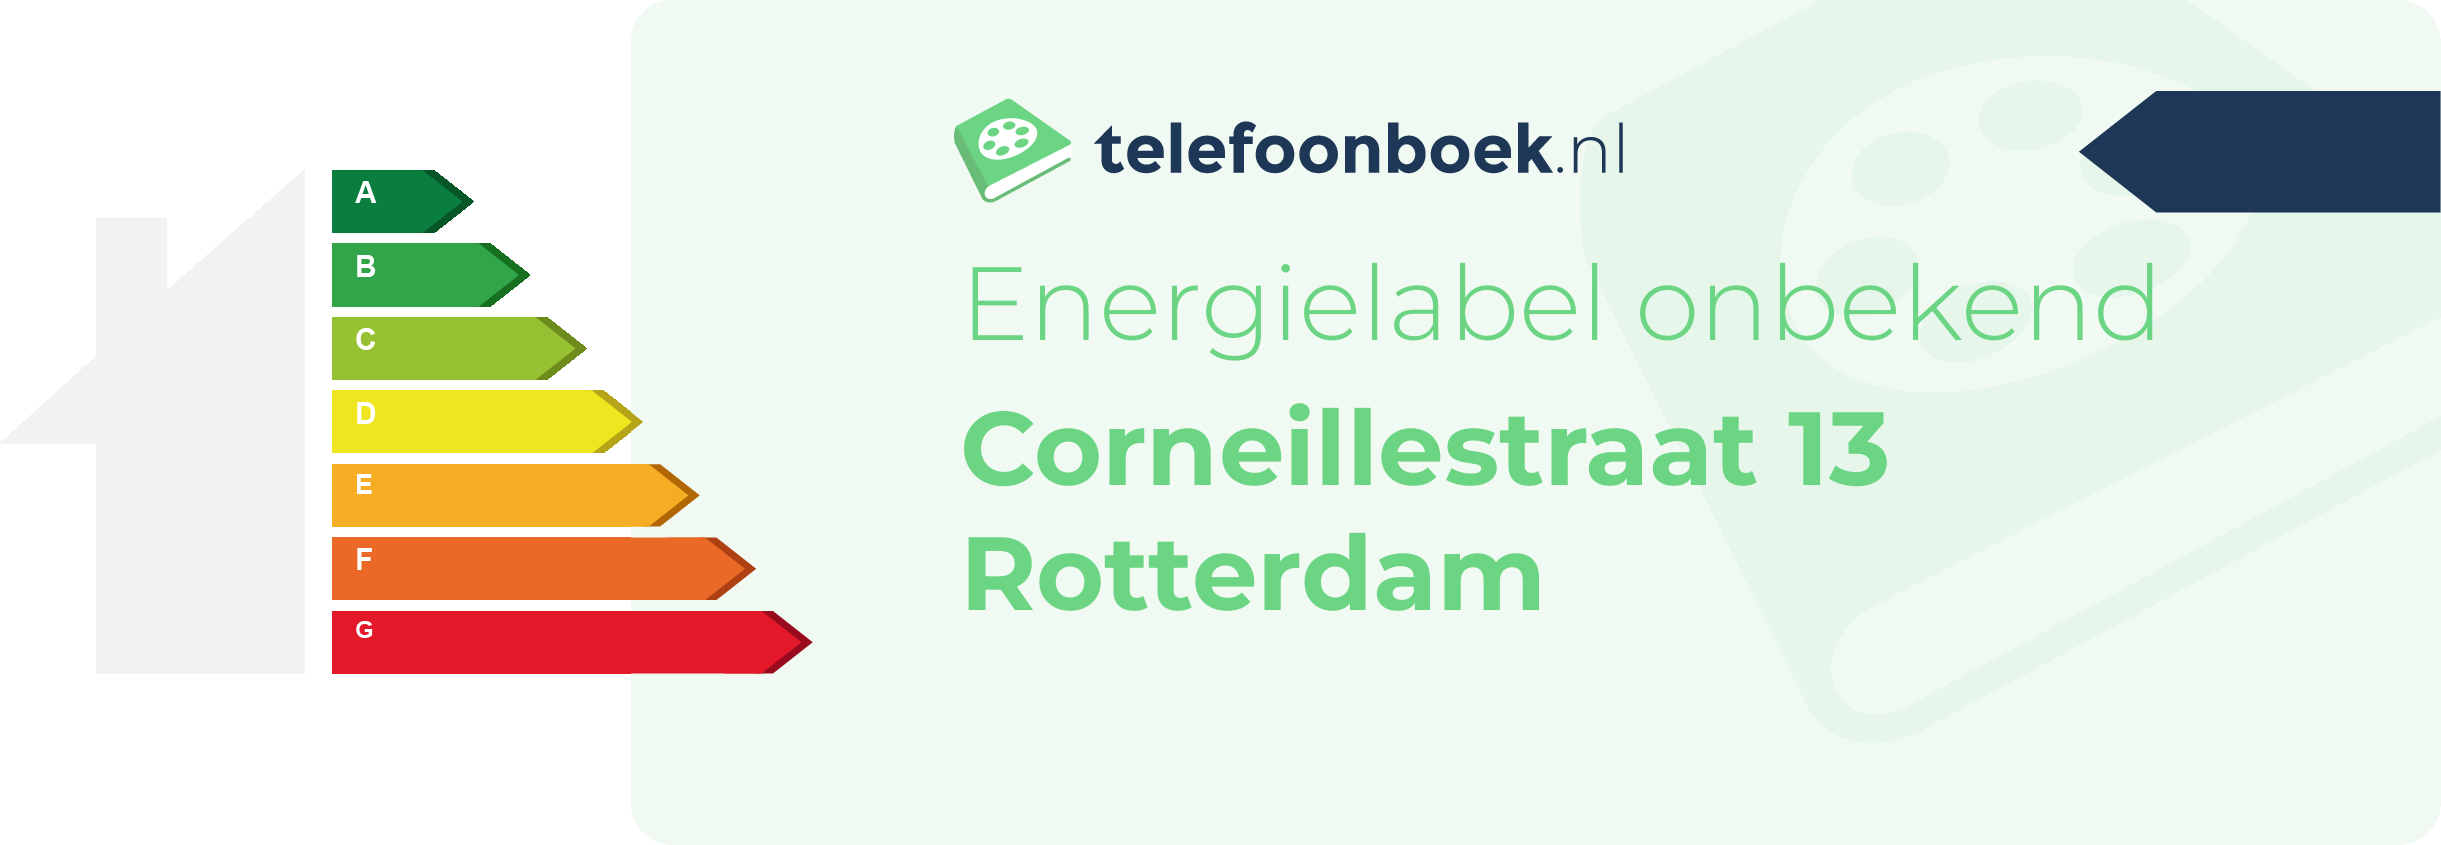 Energielabel Corneillestraat 13 Rotterdam